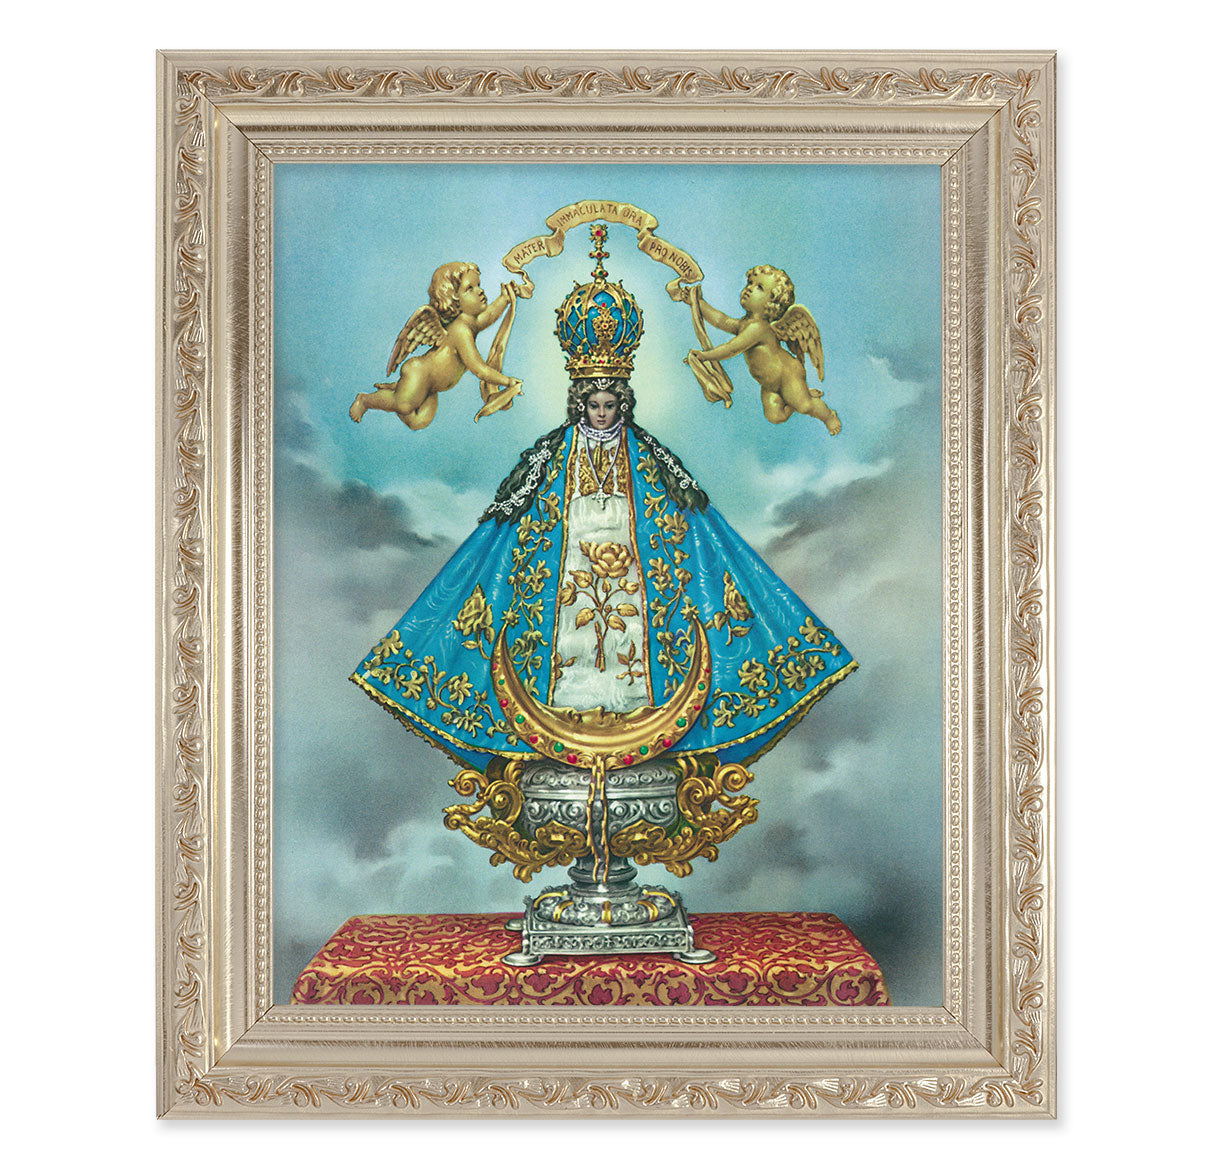 Virgen de San Juan Picture Framed Wall Art Decor Large, Anitque Silver Finely Detaild Frame with Carved Scrollwork